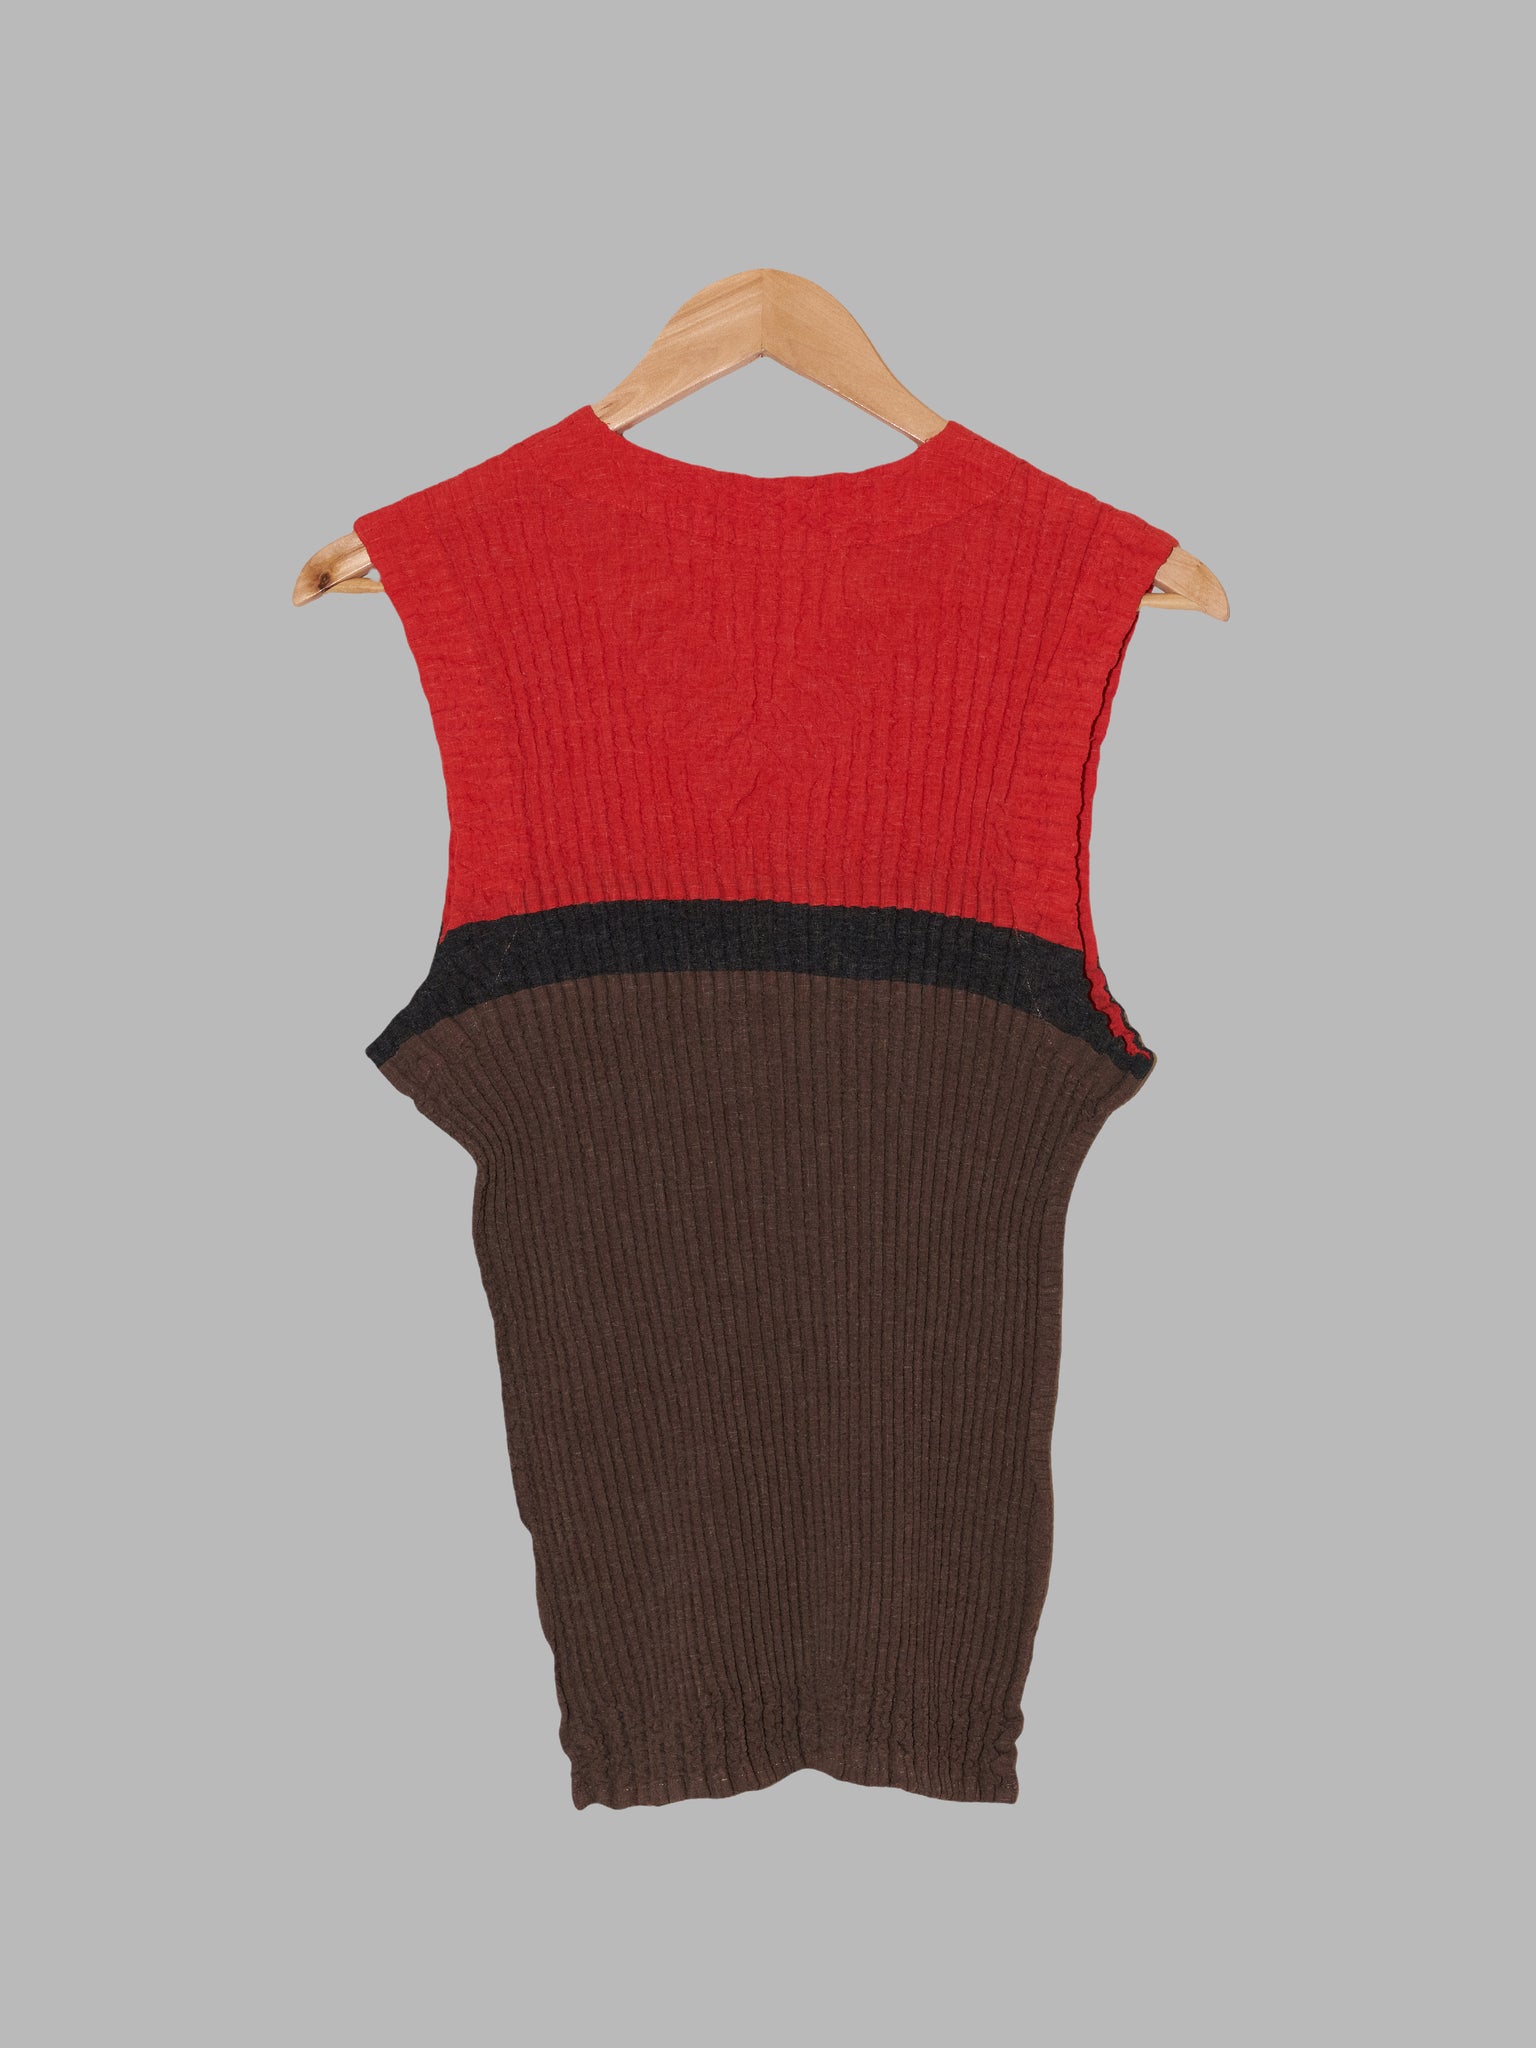 Yoshiki Hishinuma Peplum wrinkled red brown and black v-neck sleeveless top